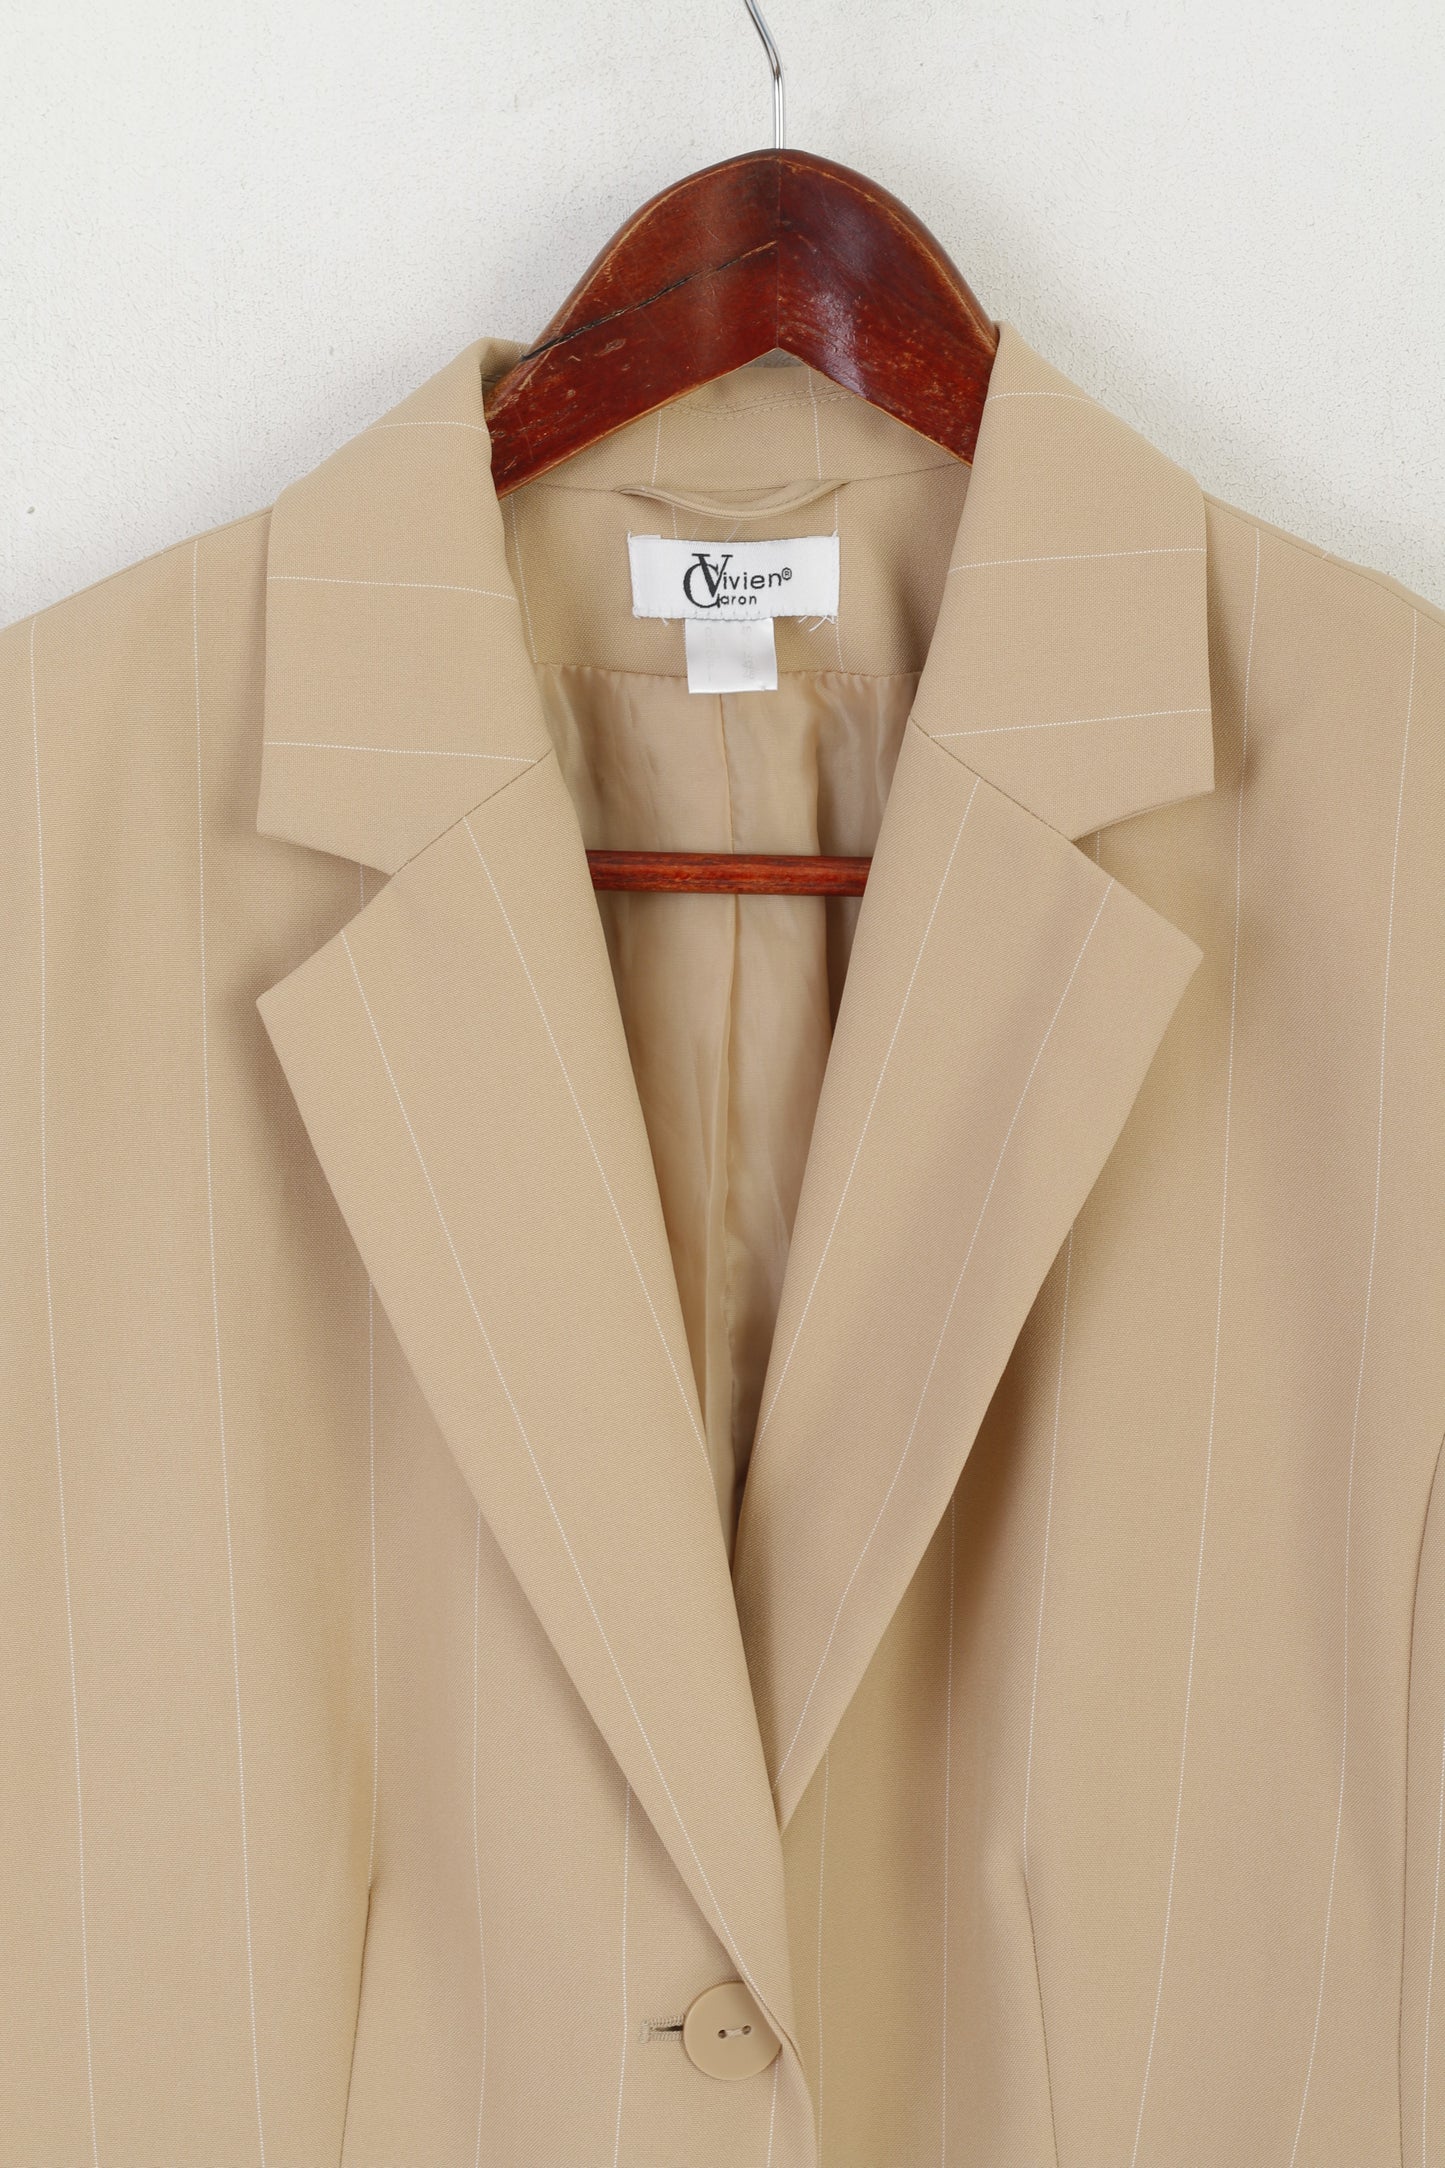 Vivien Caron Women 14 40 M Blazer Beige Striped Classic Single Breasted Jacket